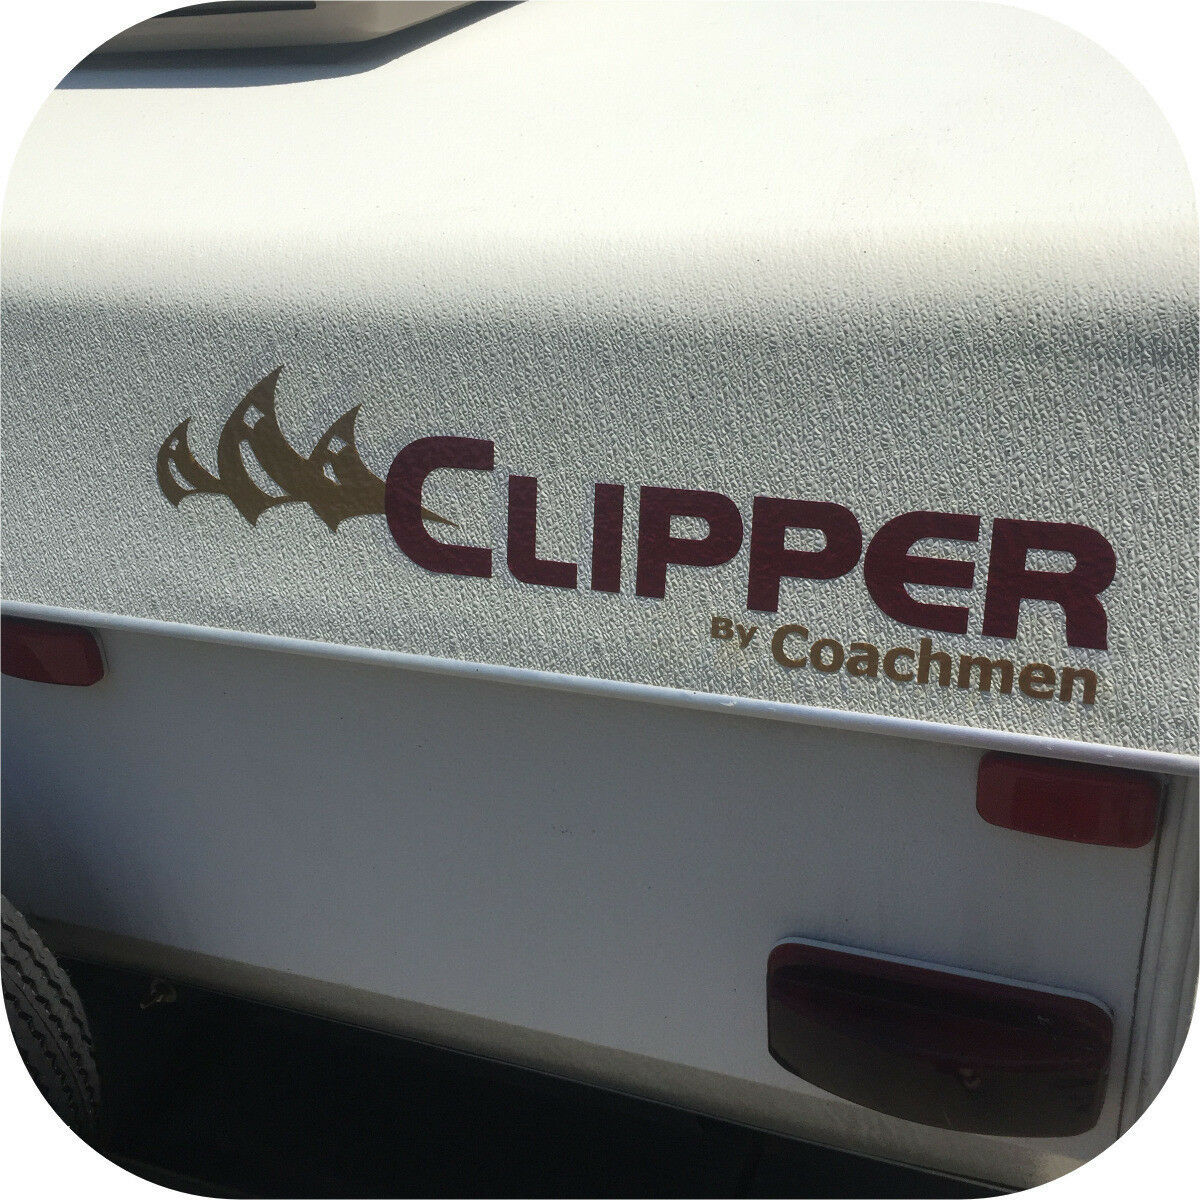 2 Stickers Decals for Coachmen Clipper Pop Up Camper 106 107 Sport 1270 POPUP